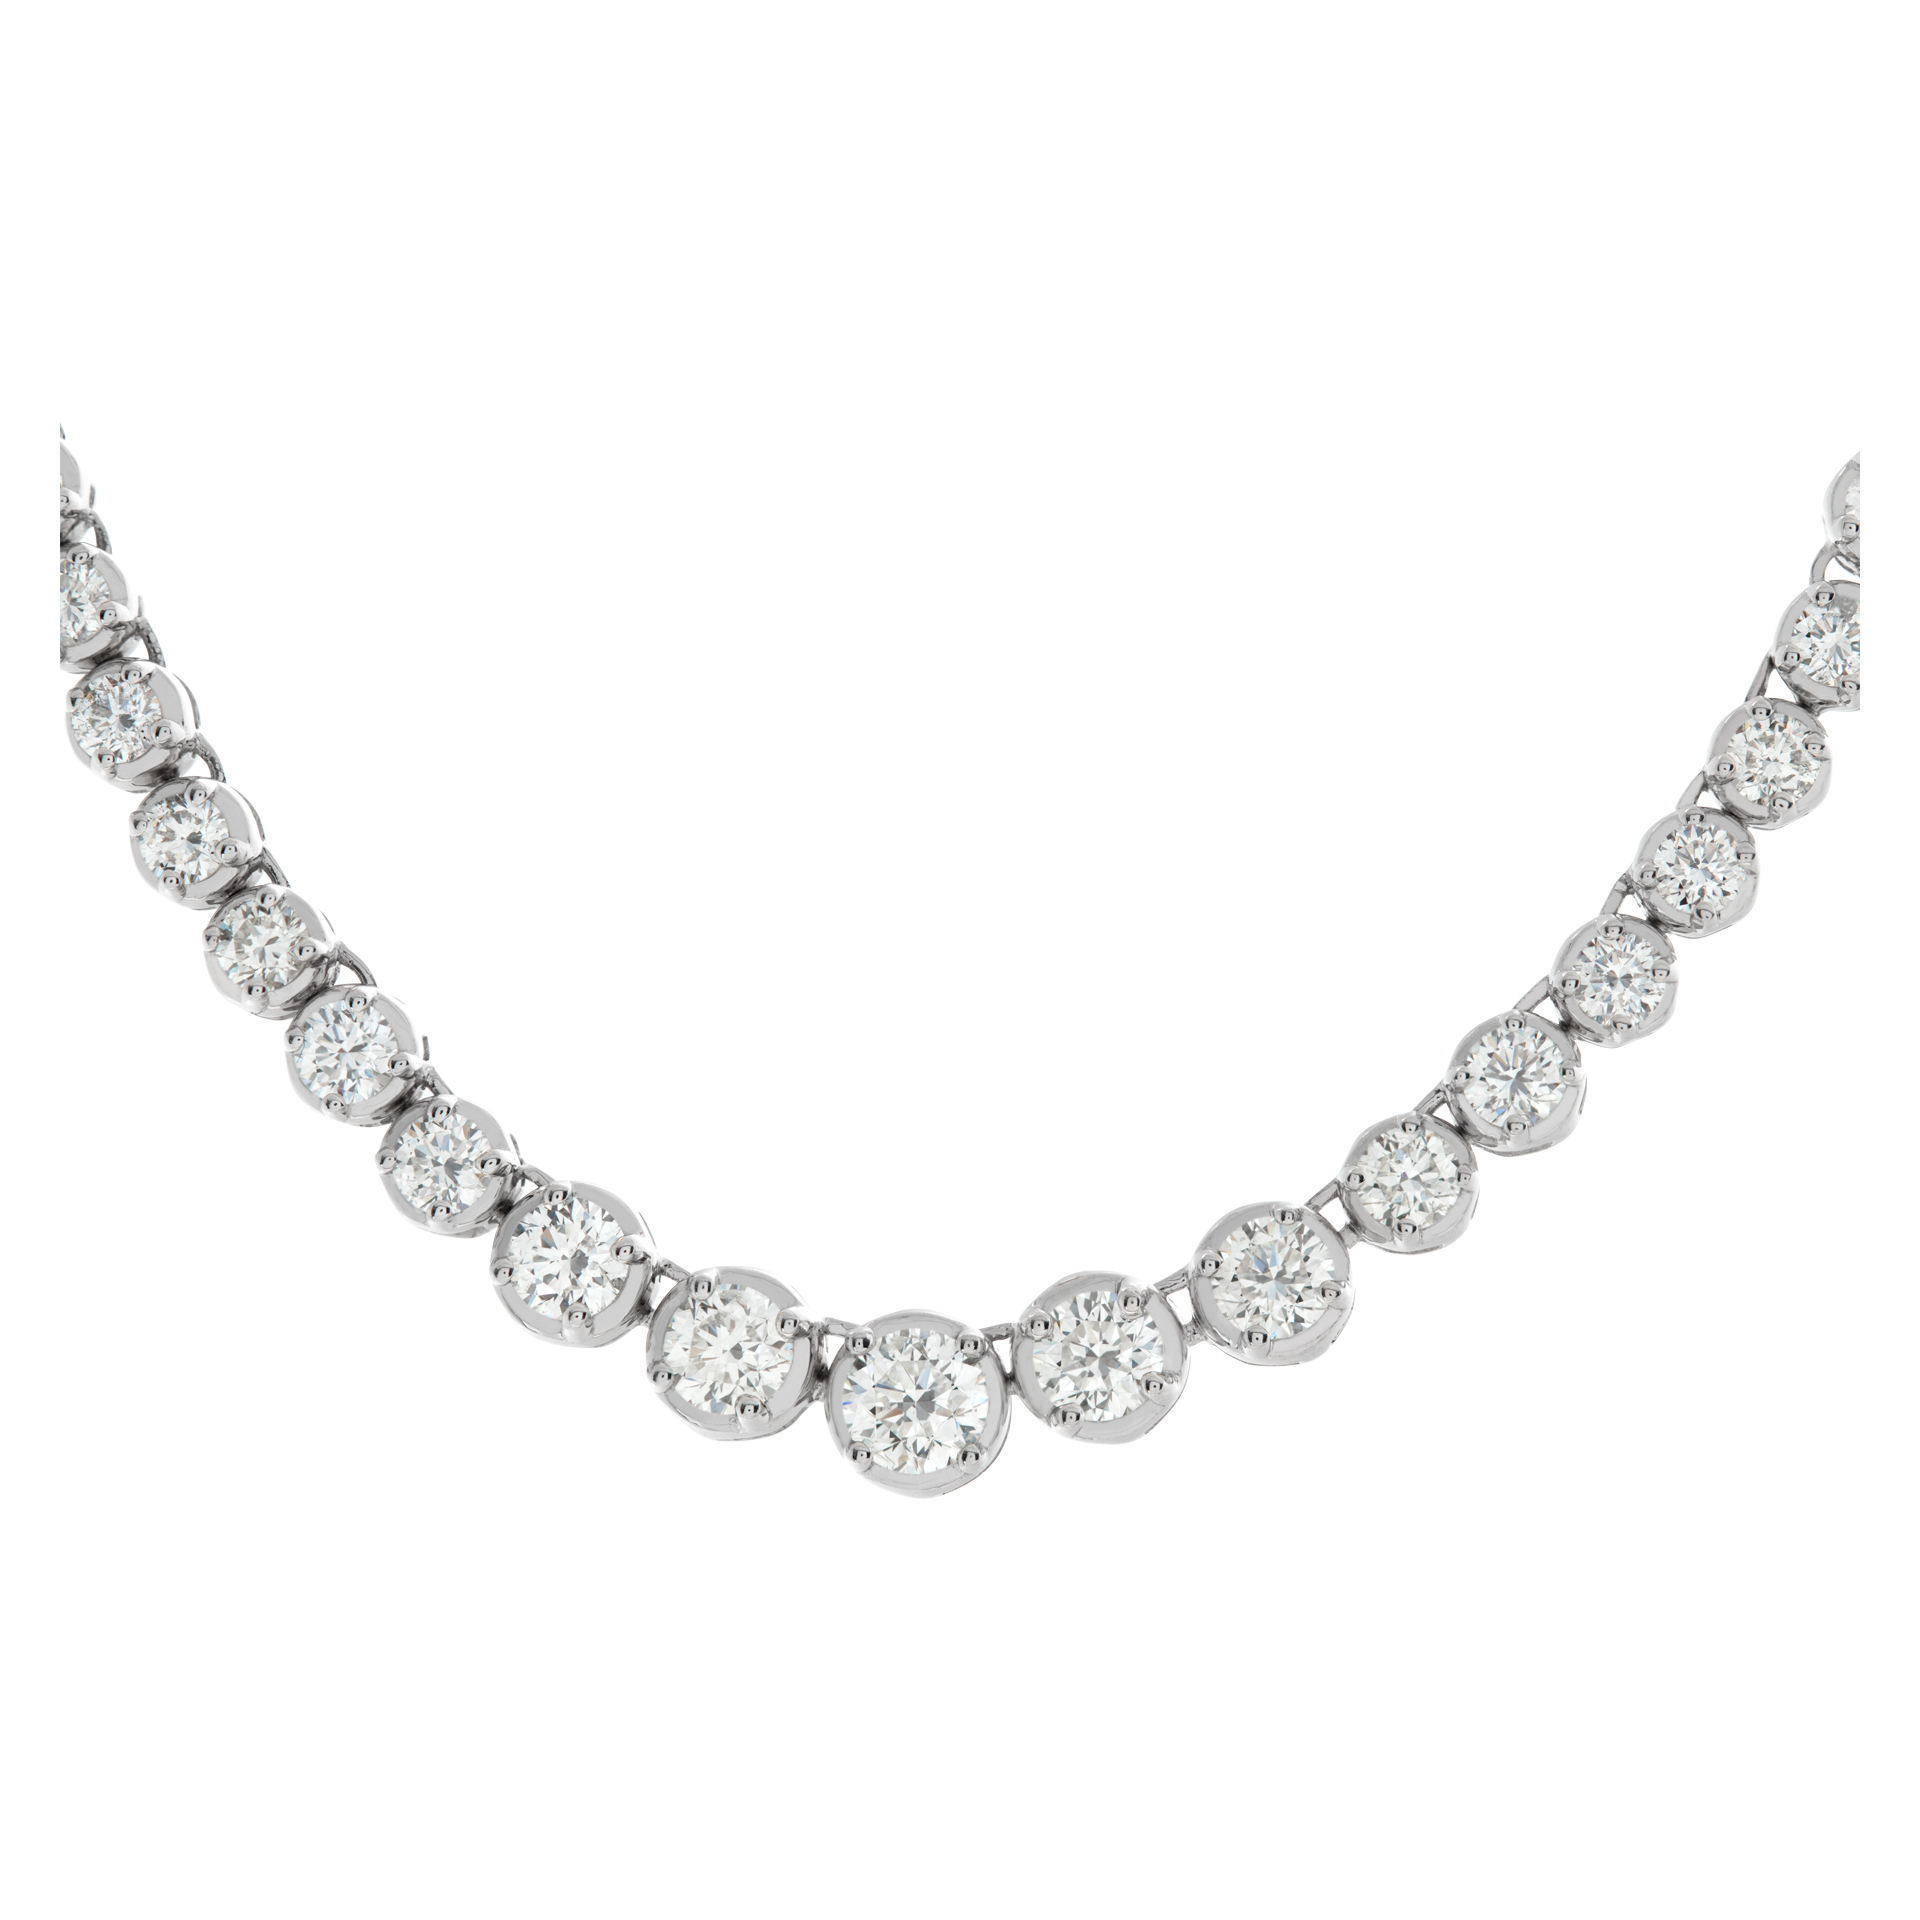 Diamond line necklace in 18k white gold